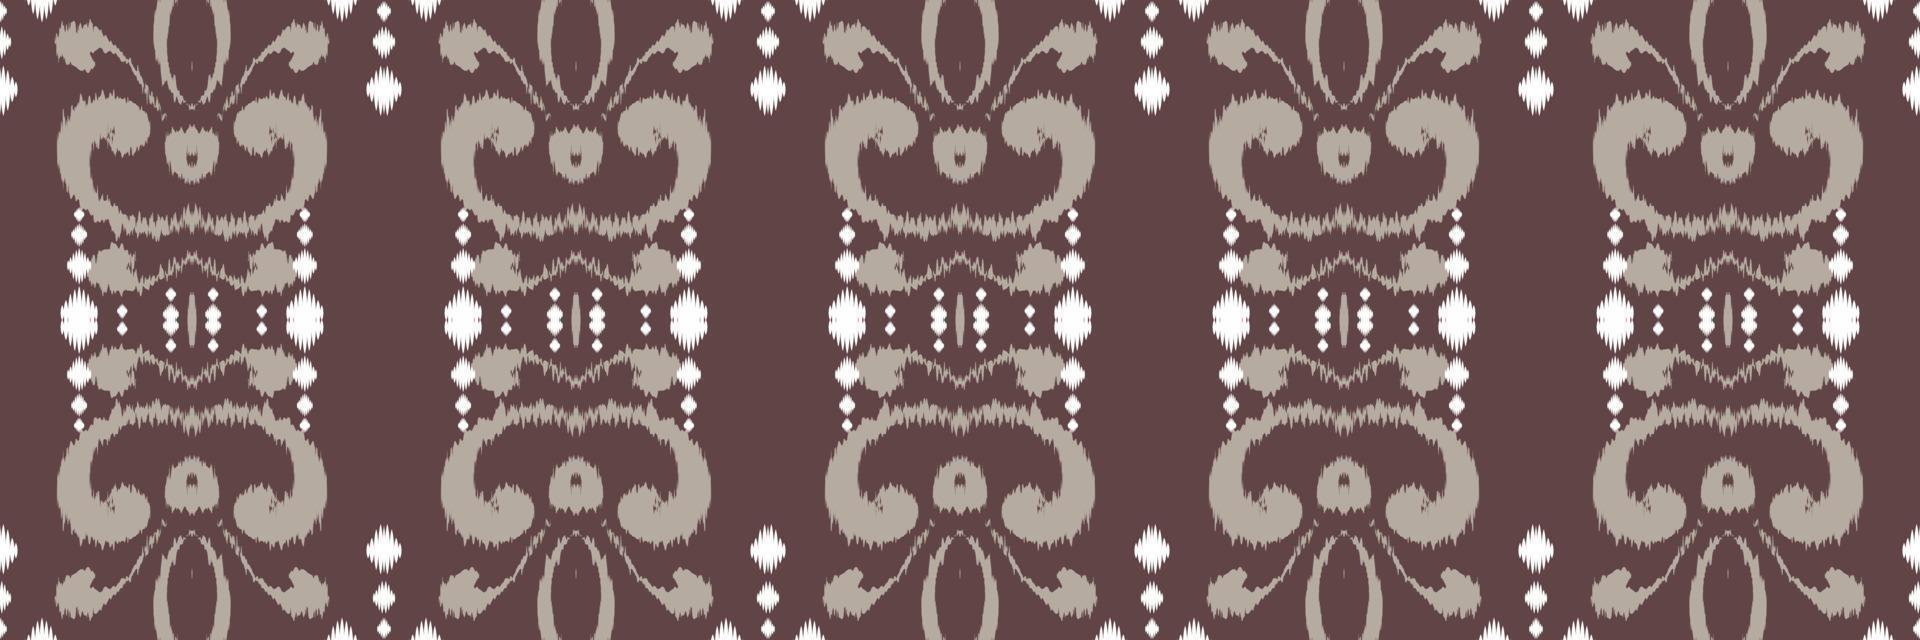 fondos tribales de tela ikat de patrones sin fisuras. étnico geométrico ikkat batik vector digital diseño textil para estampados tela sari mughal cepillo símbolo franjas textura kurti kurtis kurtas